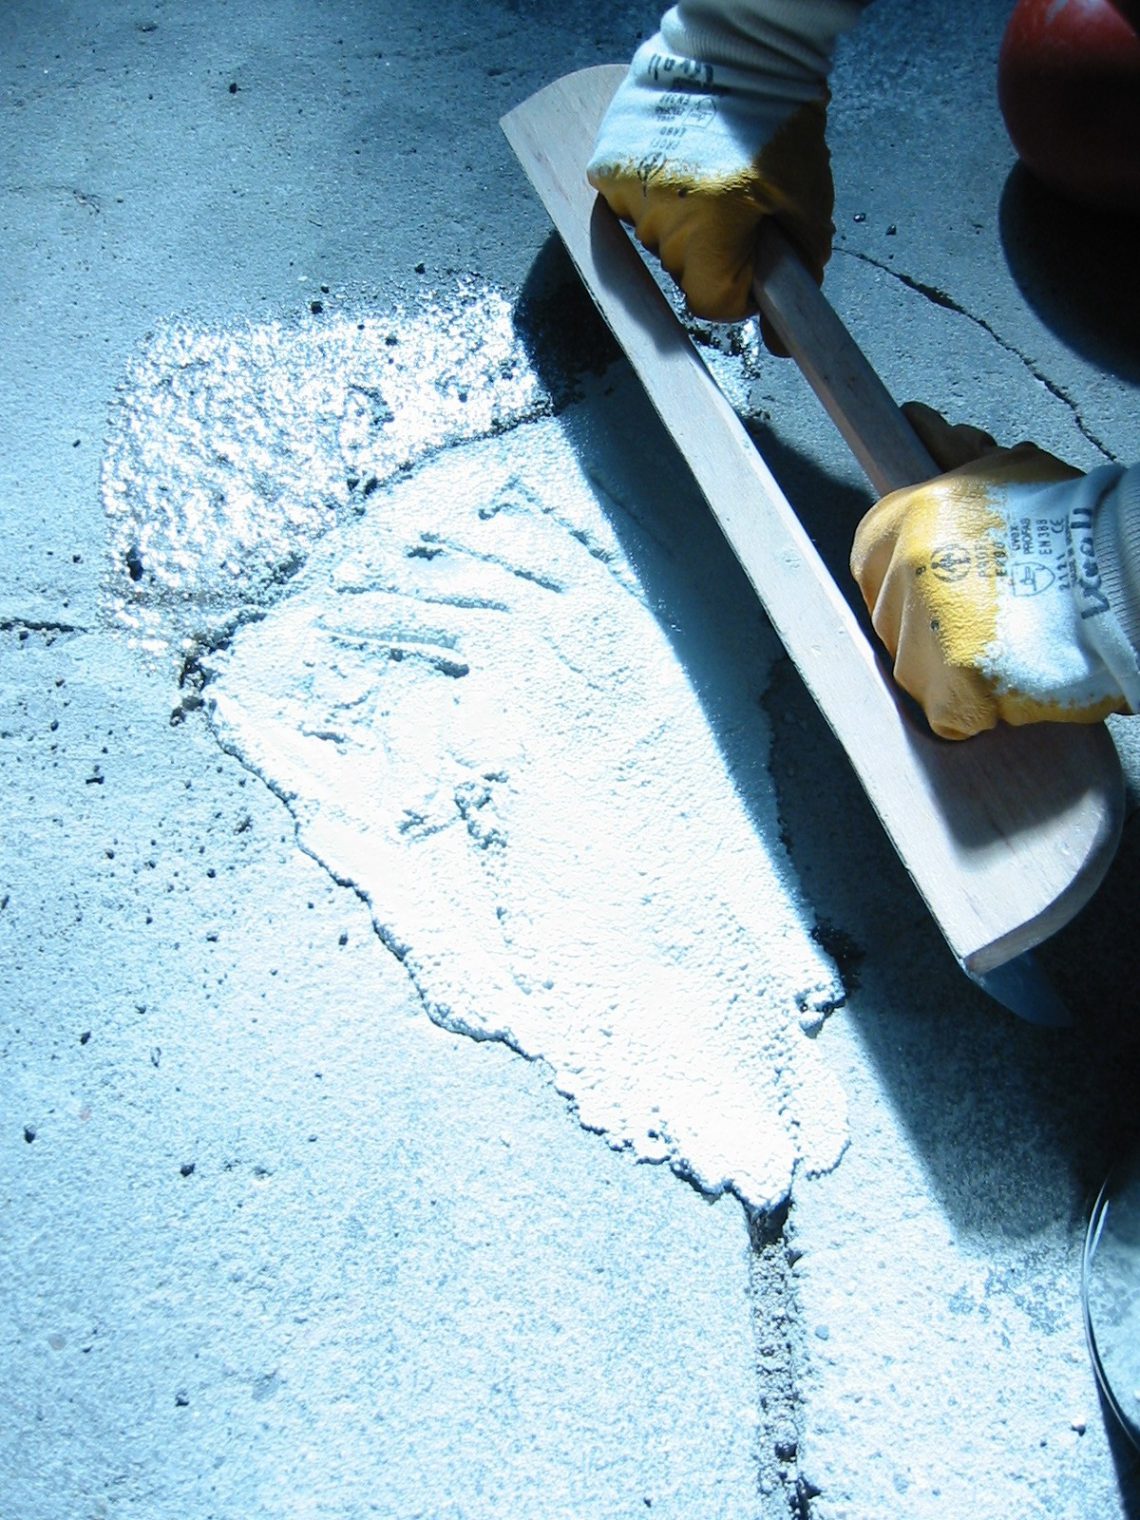 Flooring installation health and safety- rapid concrete repair. Flooring Installation In Cold Weather